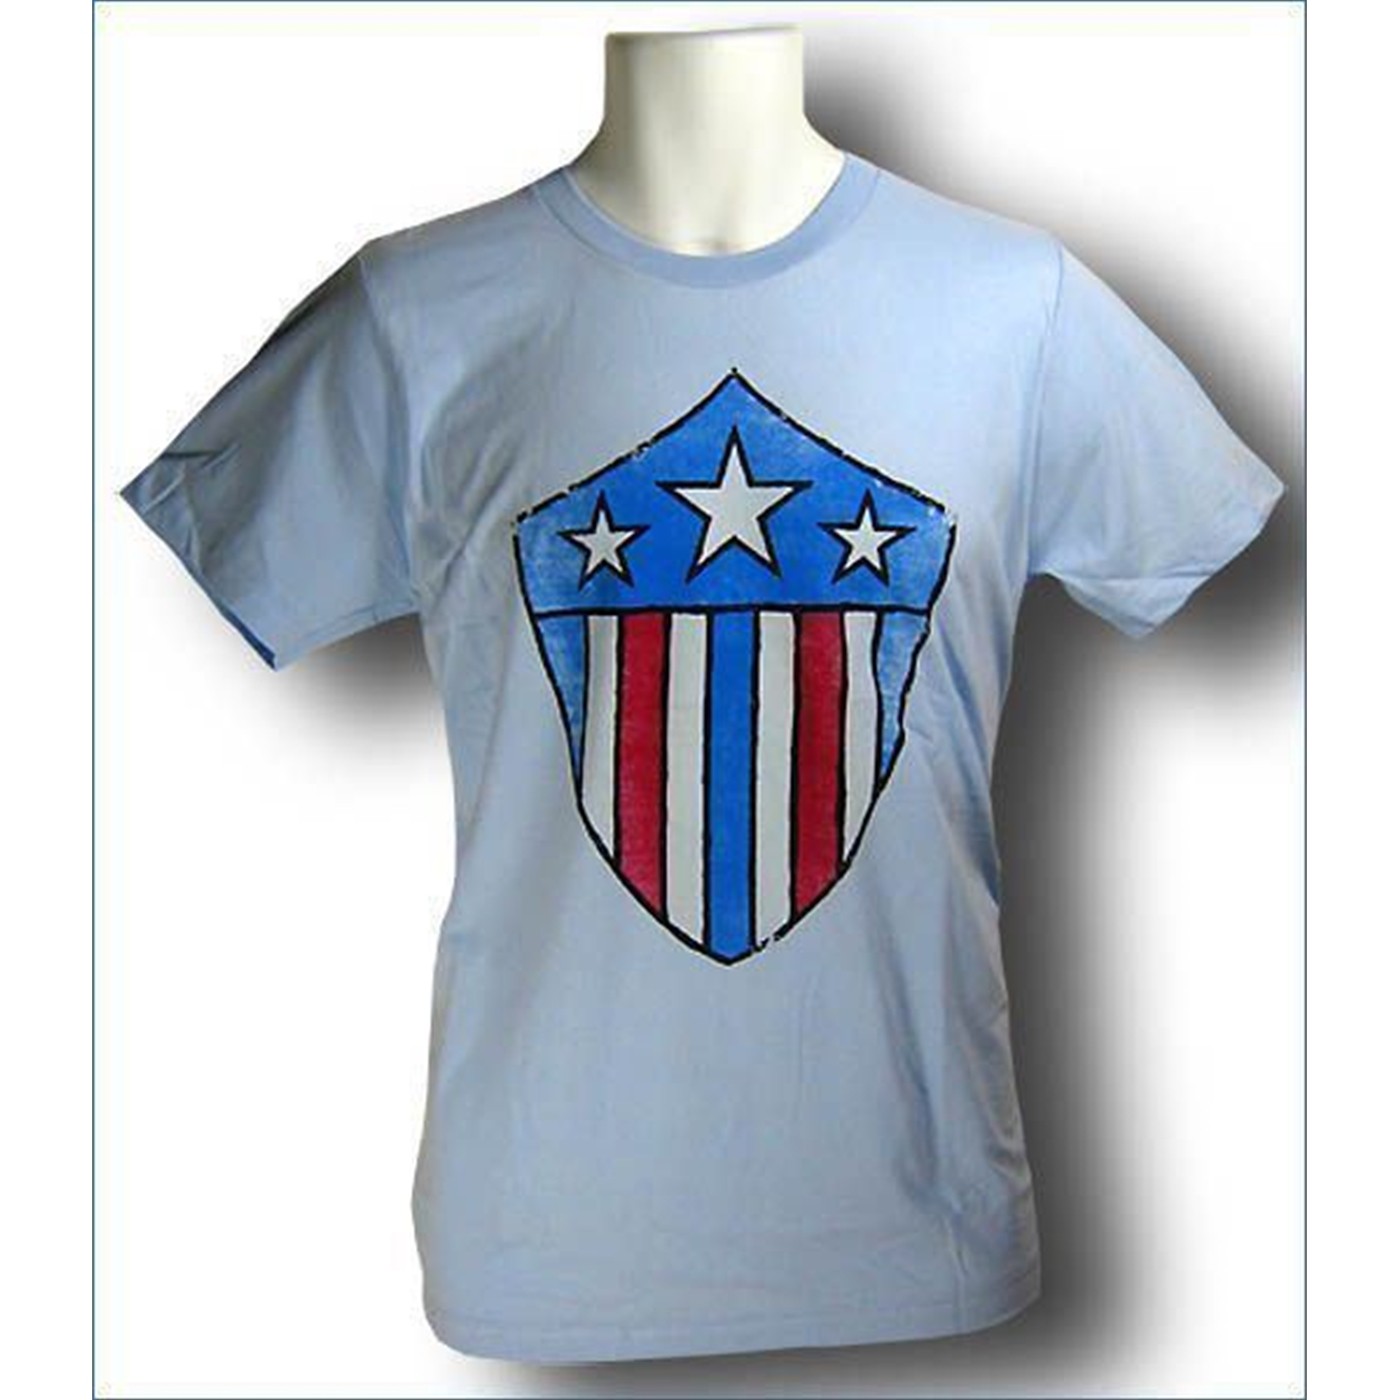 Captain America Triangular Shield T-Shirt